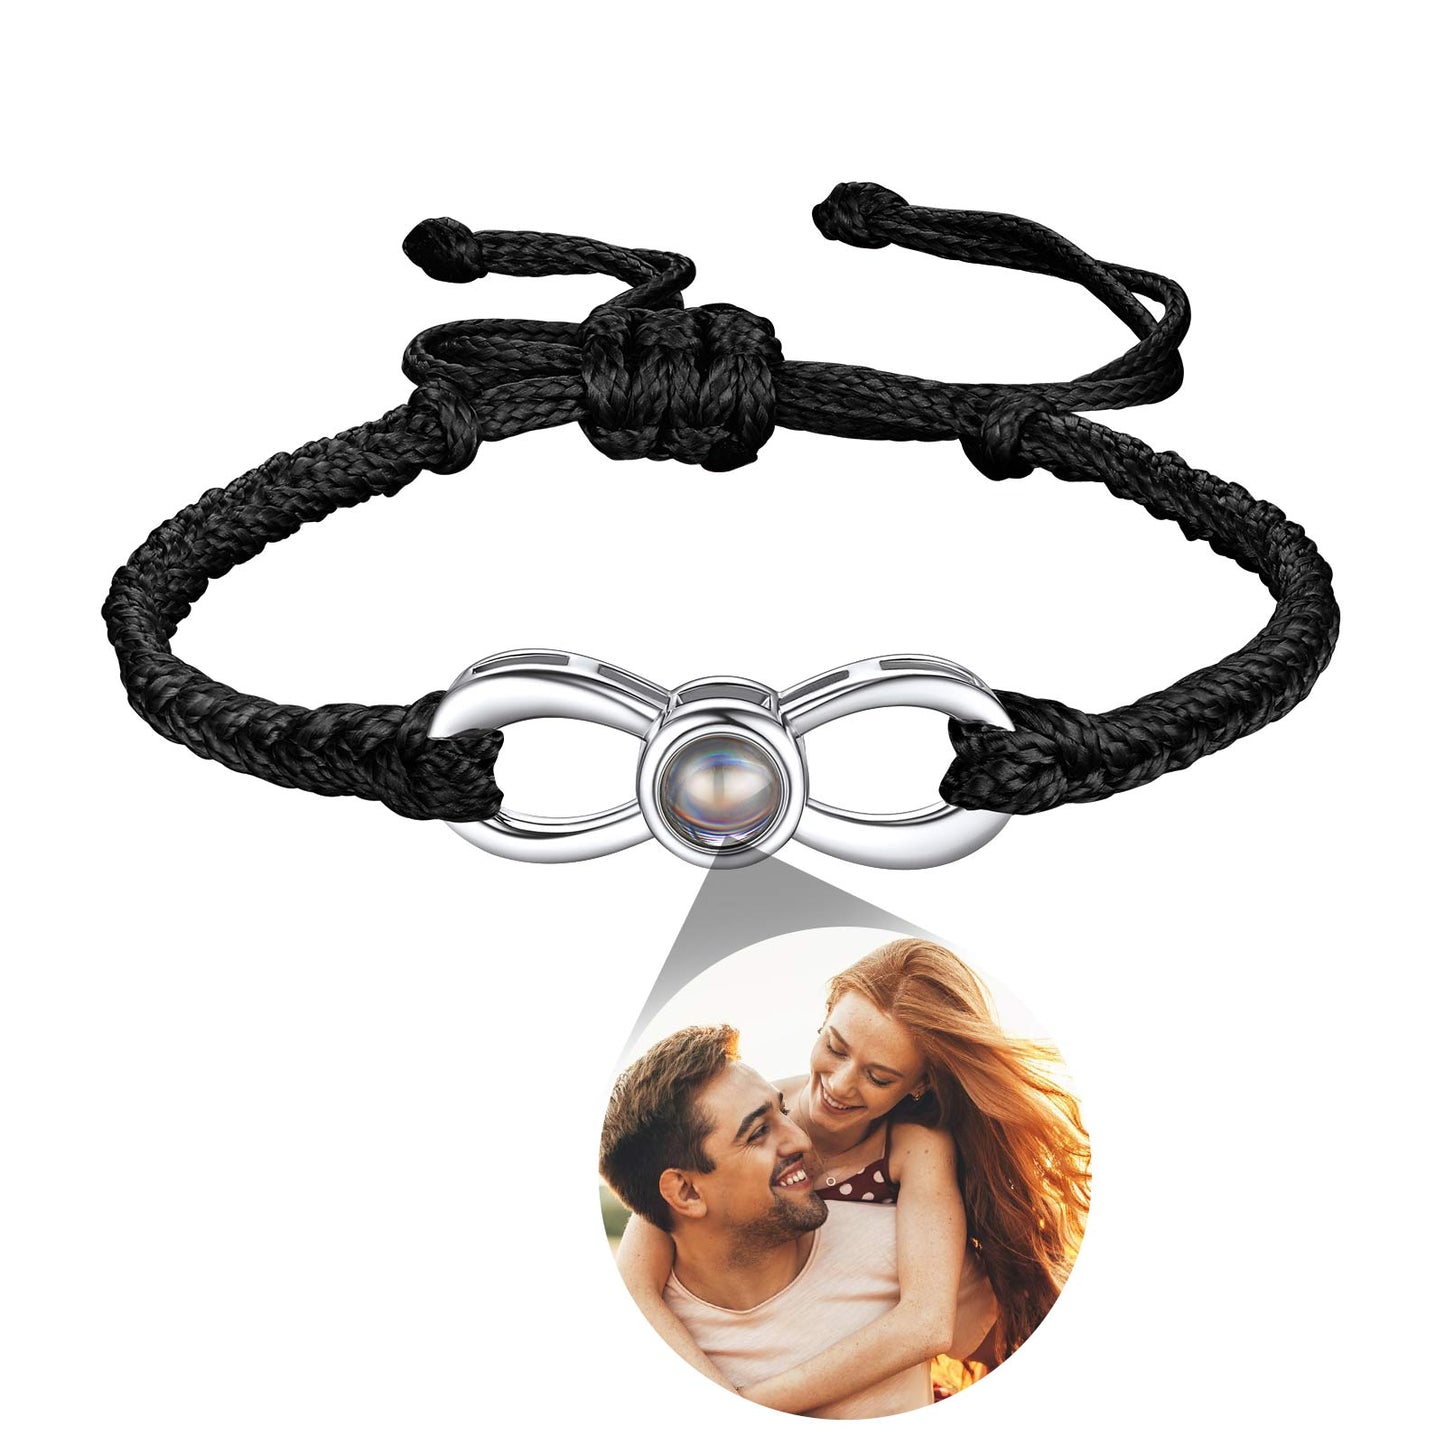 Personalized Infinity Photo Projection Bracelet Braided Rope Bracelet